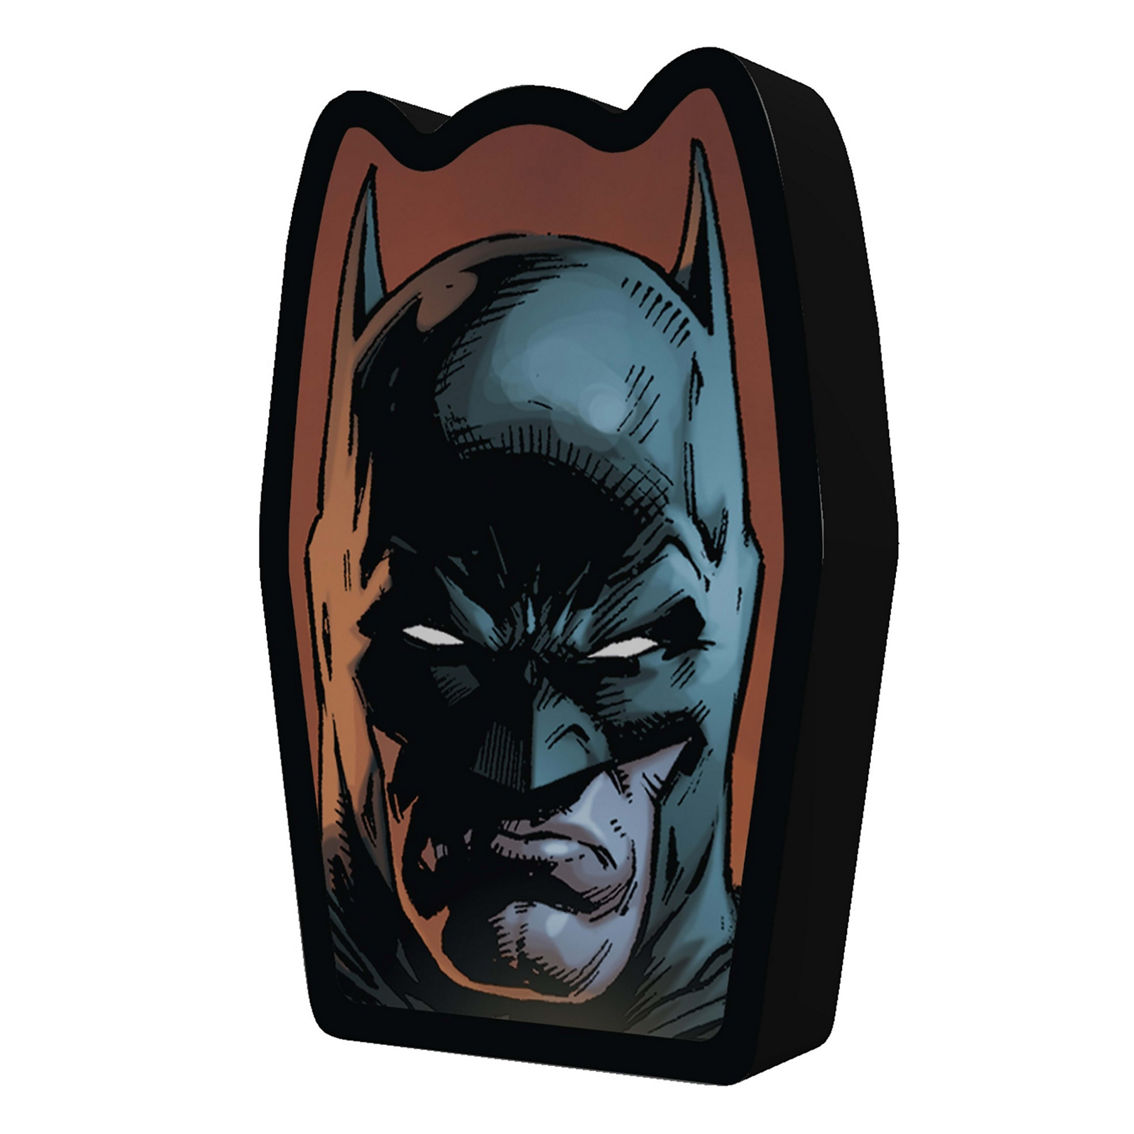 Prime 3D DC Comics Batman 3D Lenticular Puzzle in a Collectible Shaped Tin: 300 Pcs - Image 2 of 5